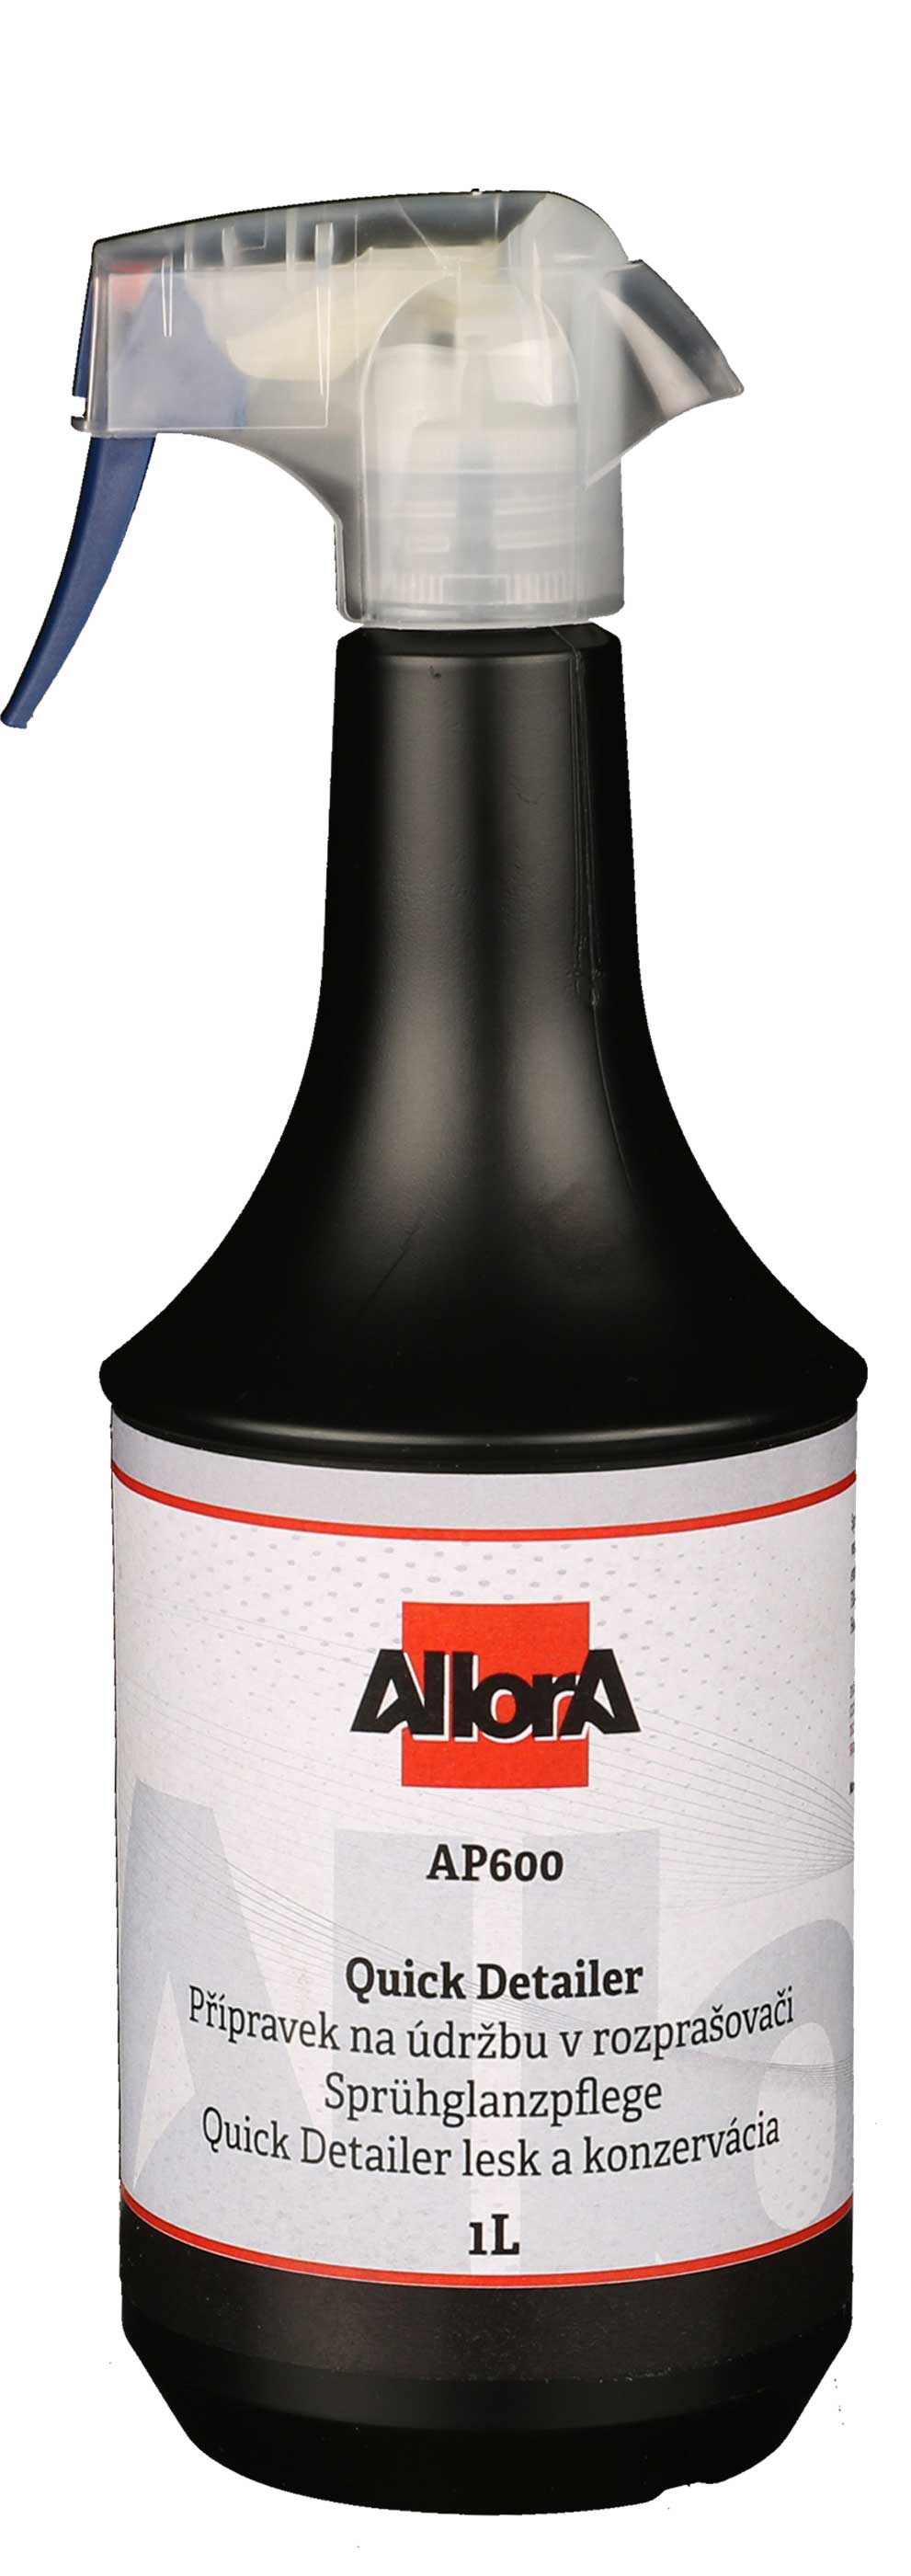 AllorA Quick Detailer Sprühglanzpflege AP600